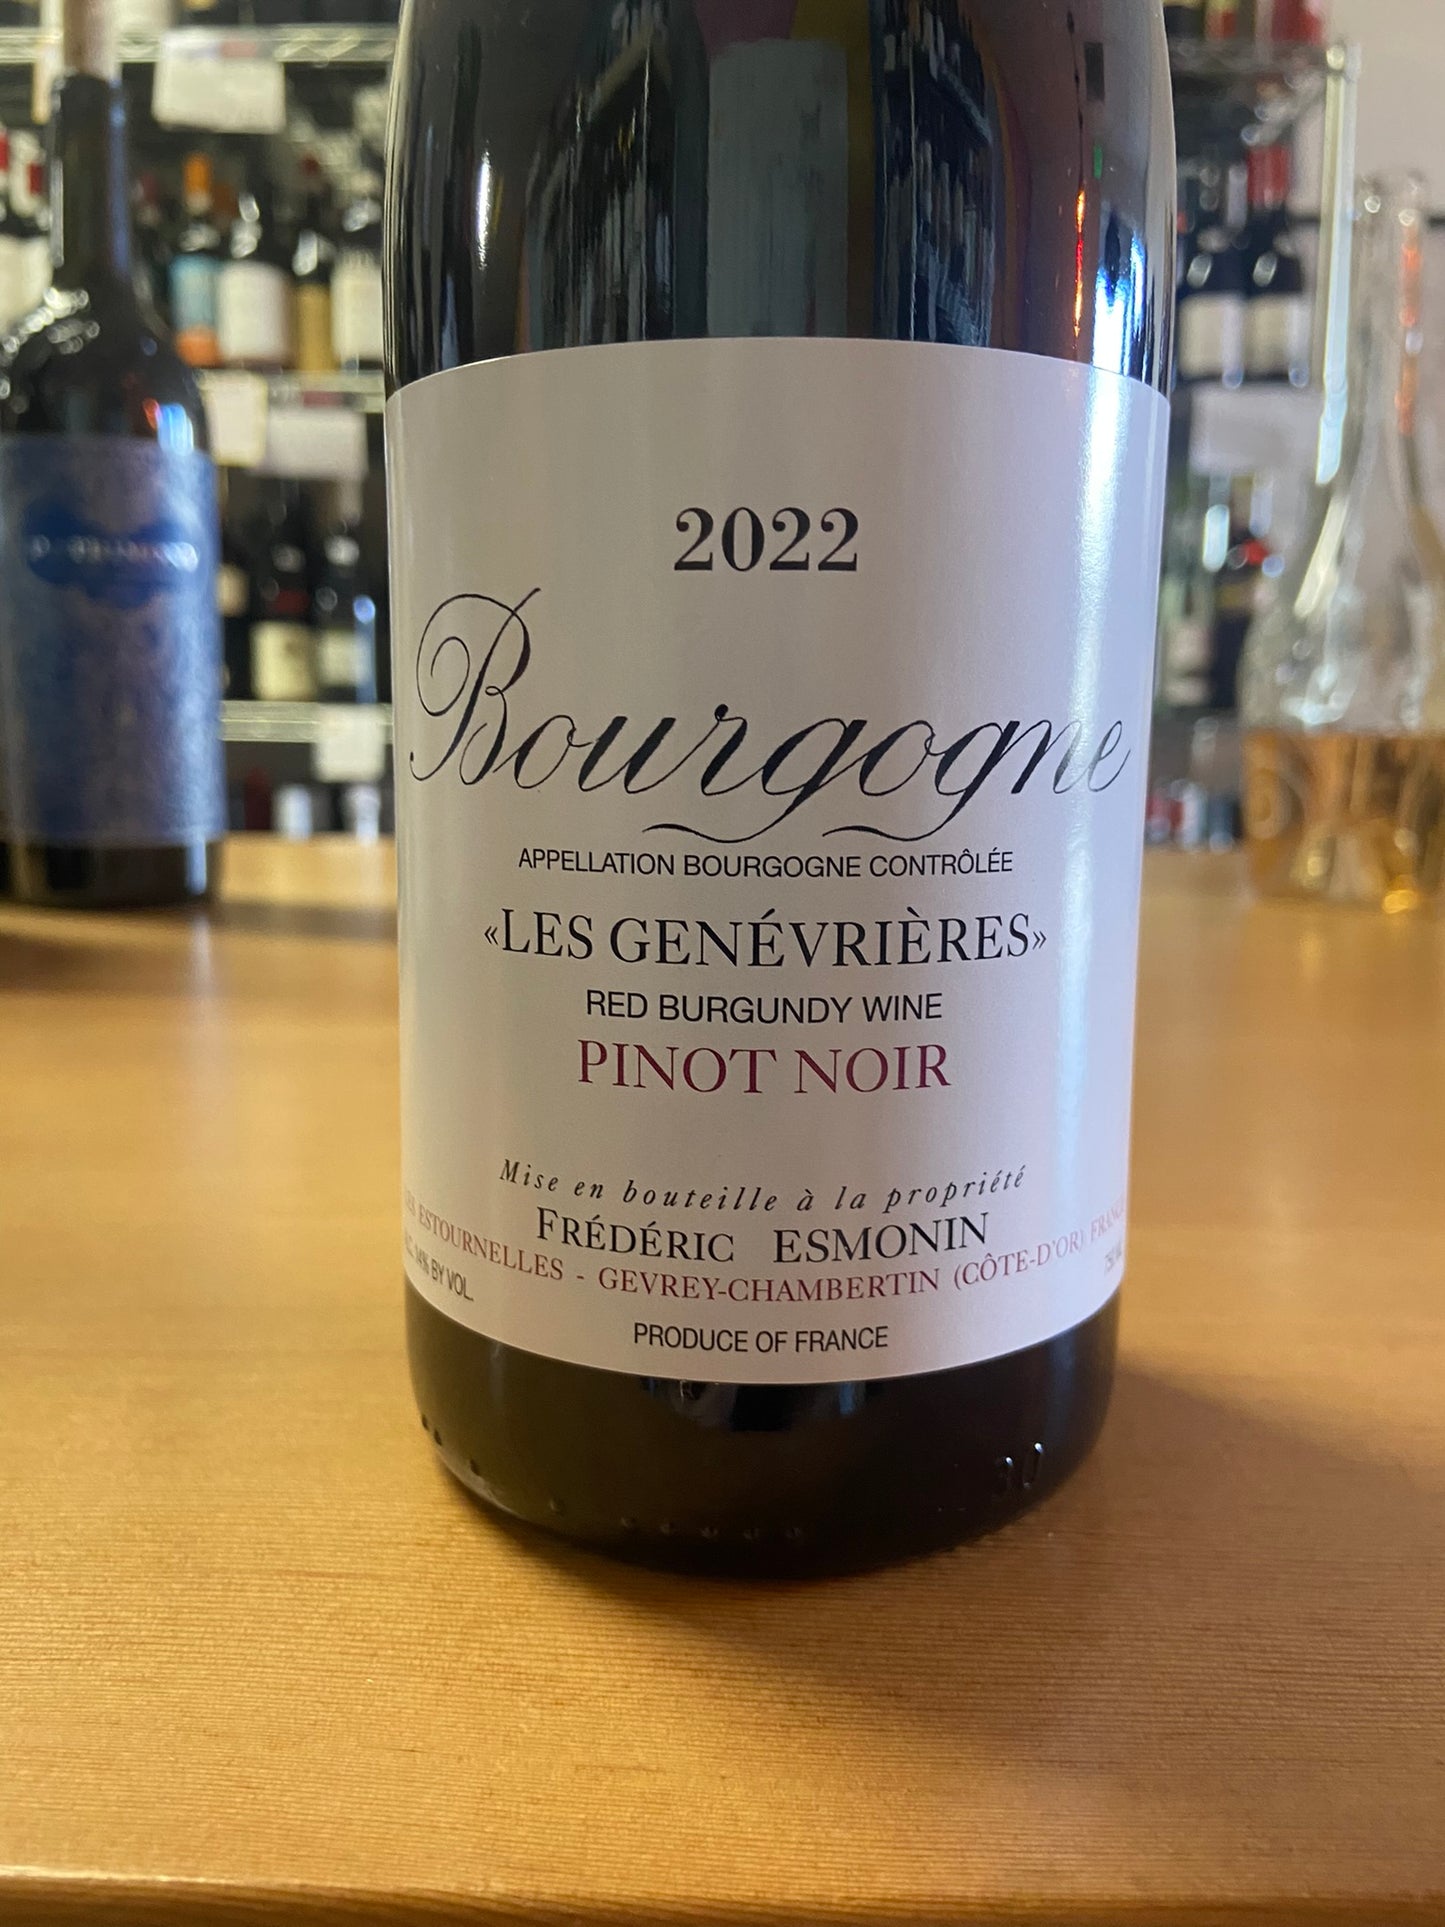 FREDERIC ESMONIN 2022 Pinot Noir 'Les Genevrieres' (Burgundy, France)